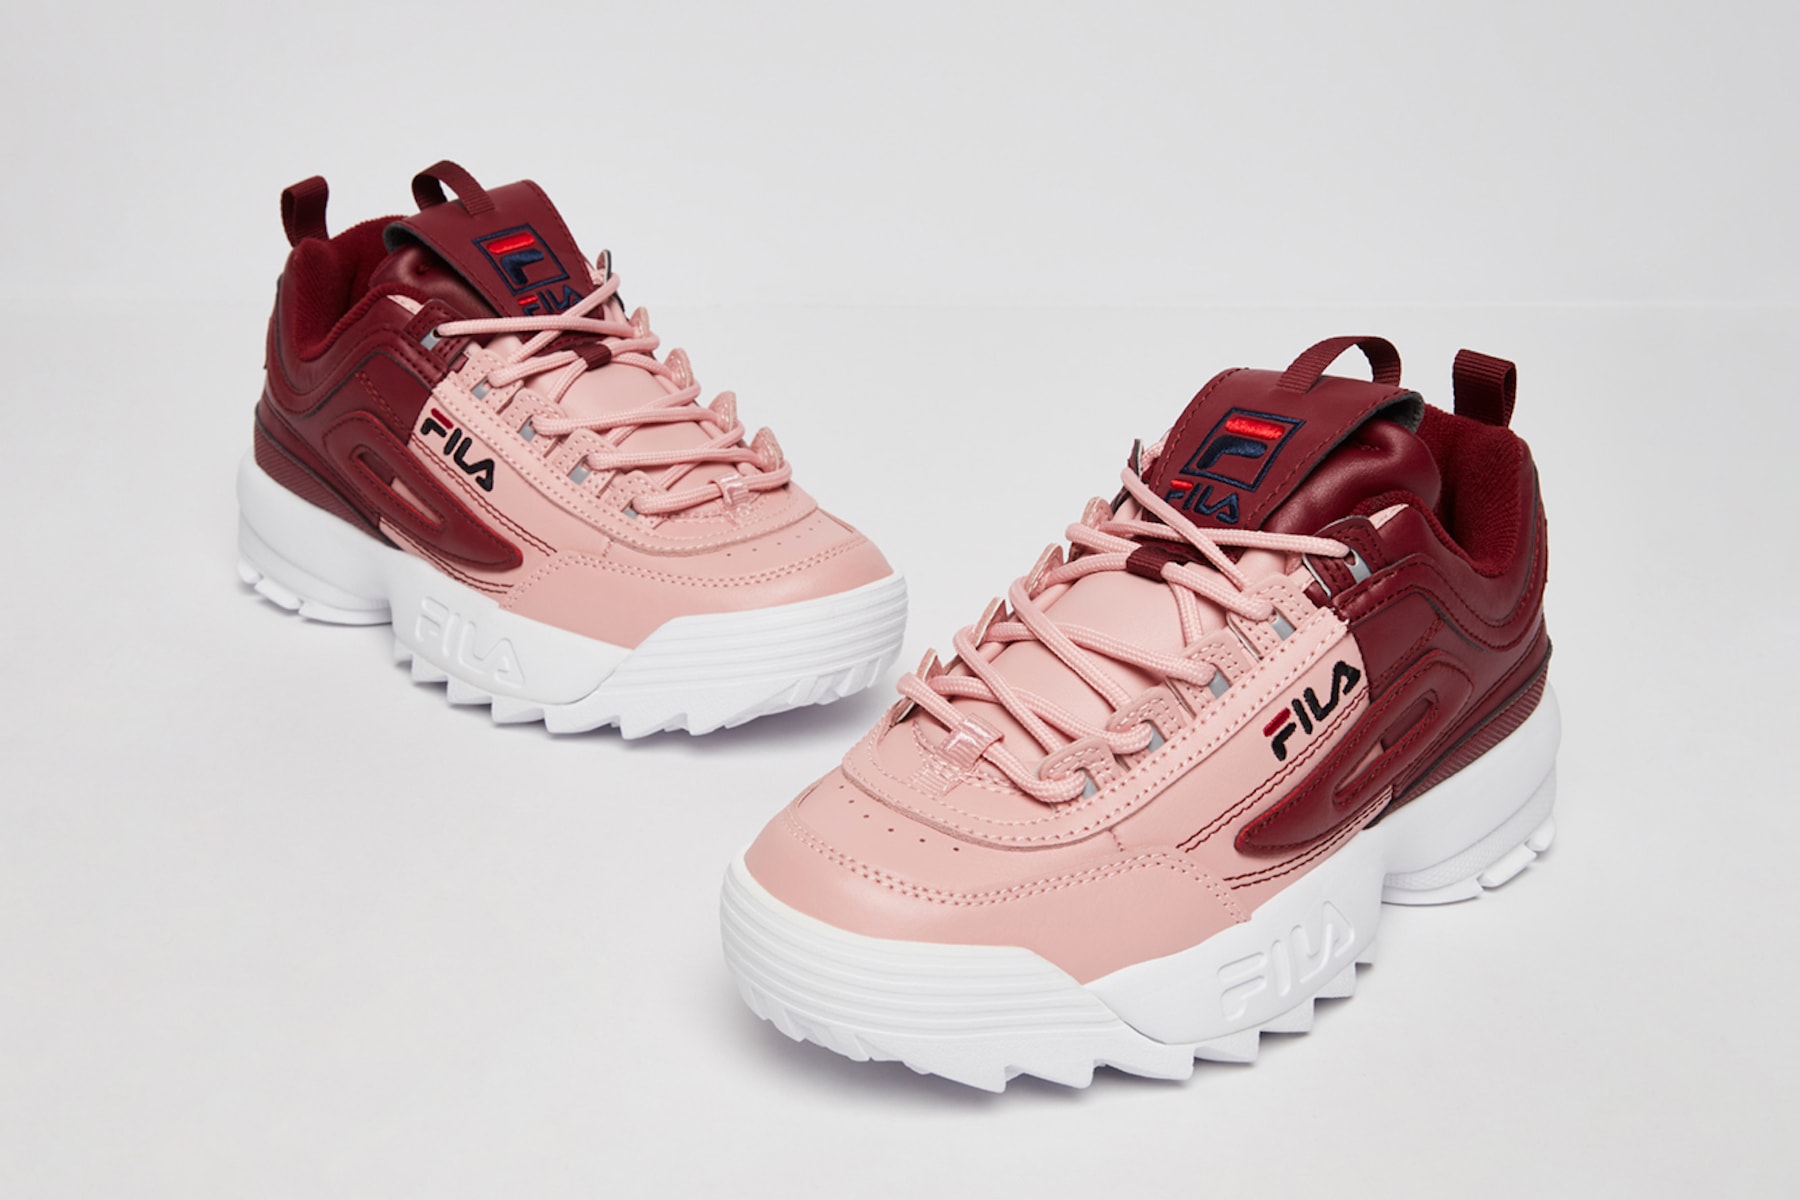 FILA Disruptor 2 Split Red/Pink Black/Grey Sneaker Release Where to Buy